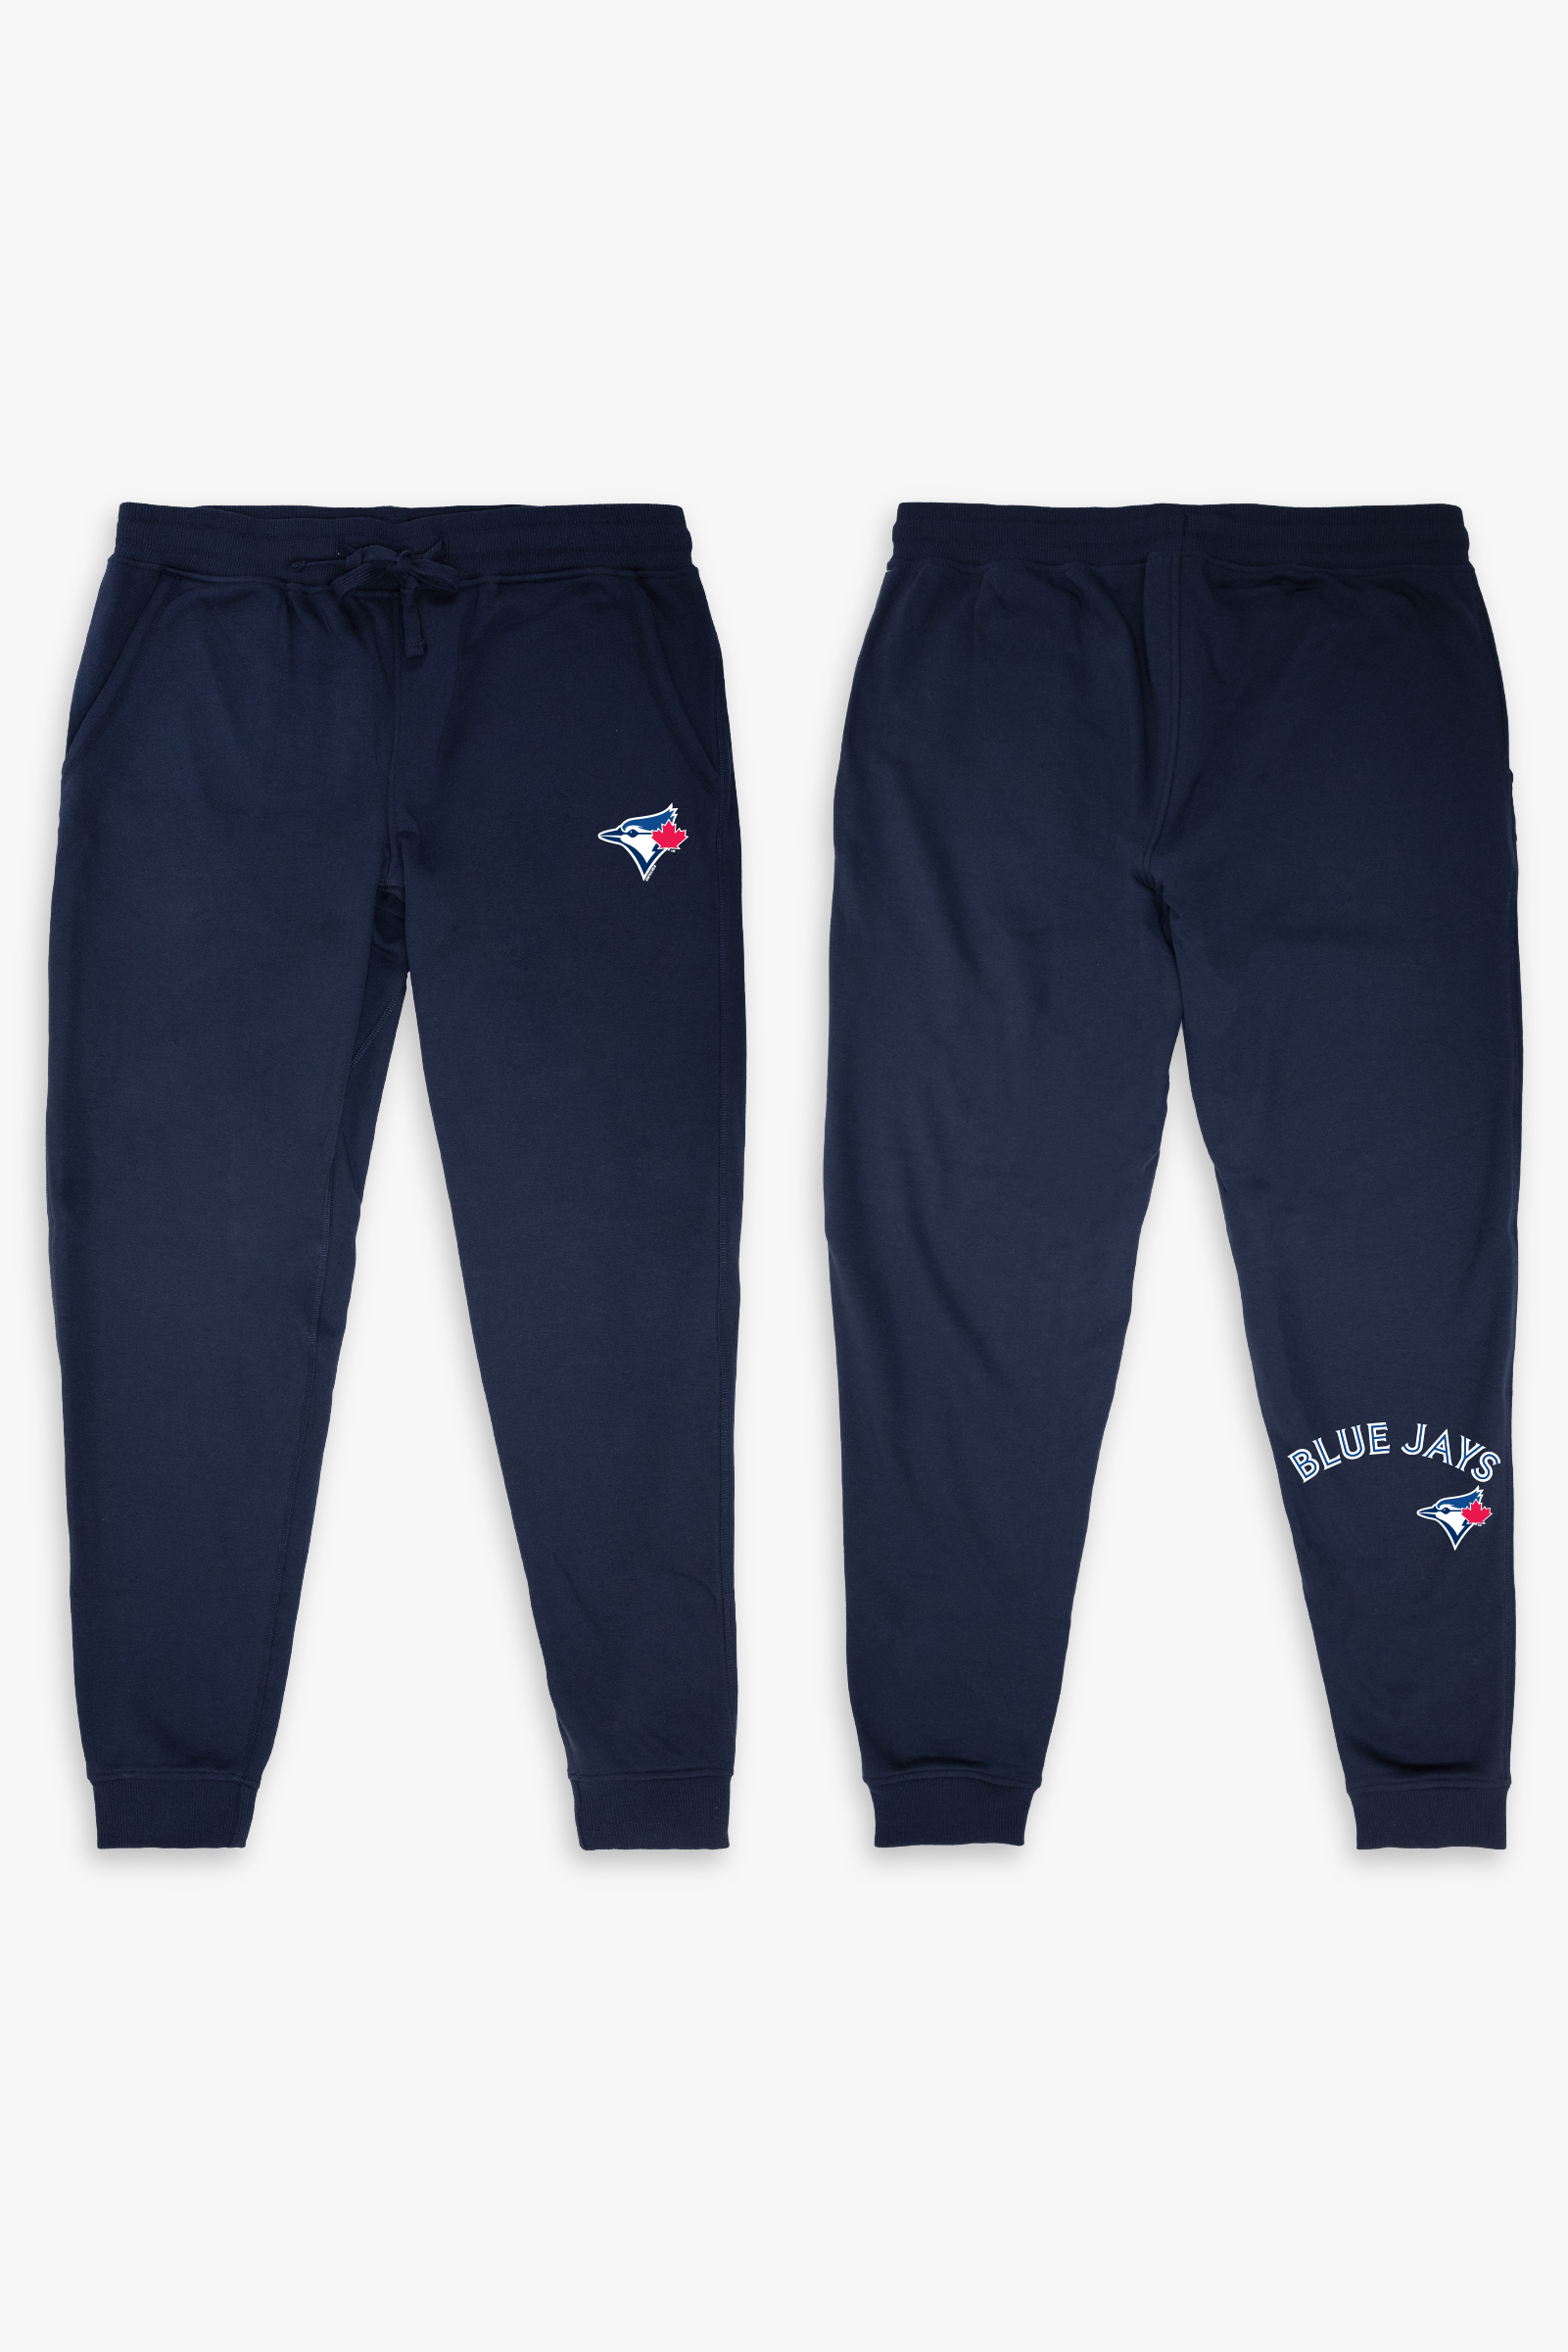 Gertex MLB Toronto Blue Jays Navy Blue Adult Lounge Pants